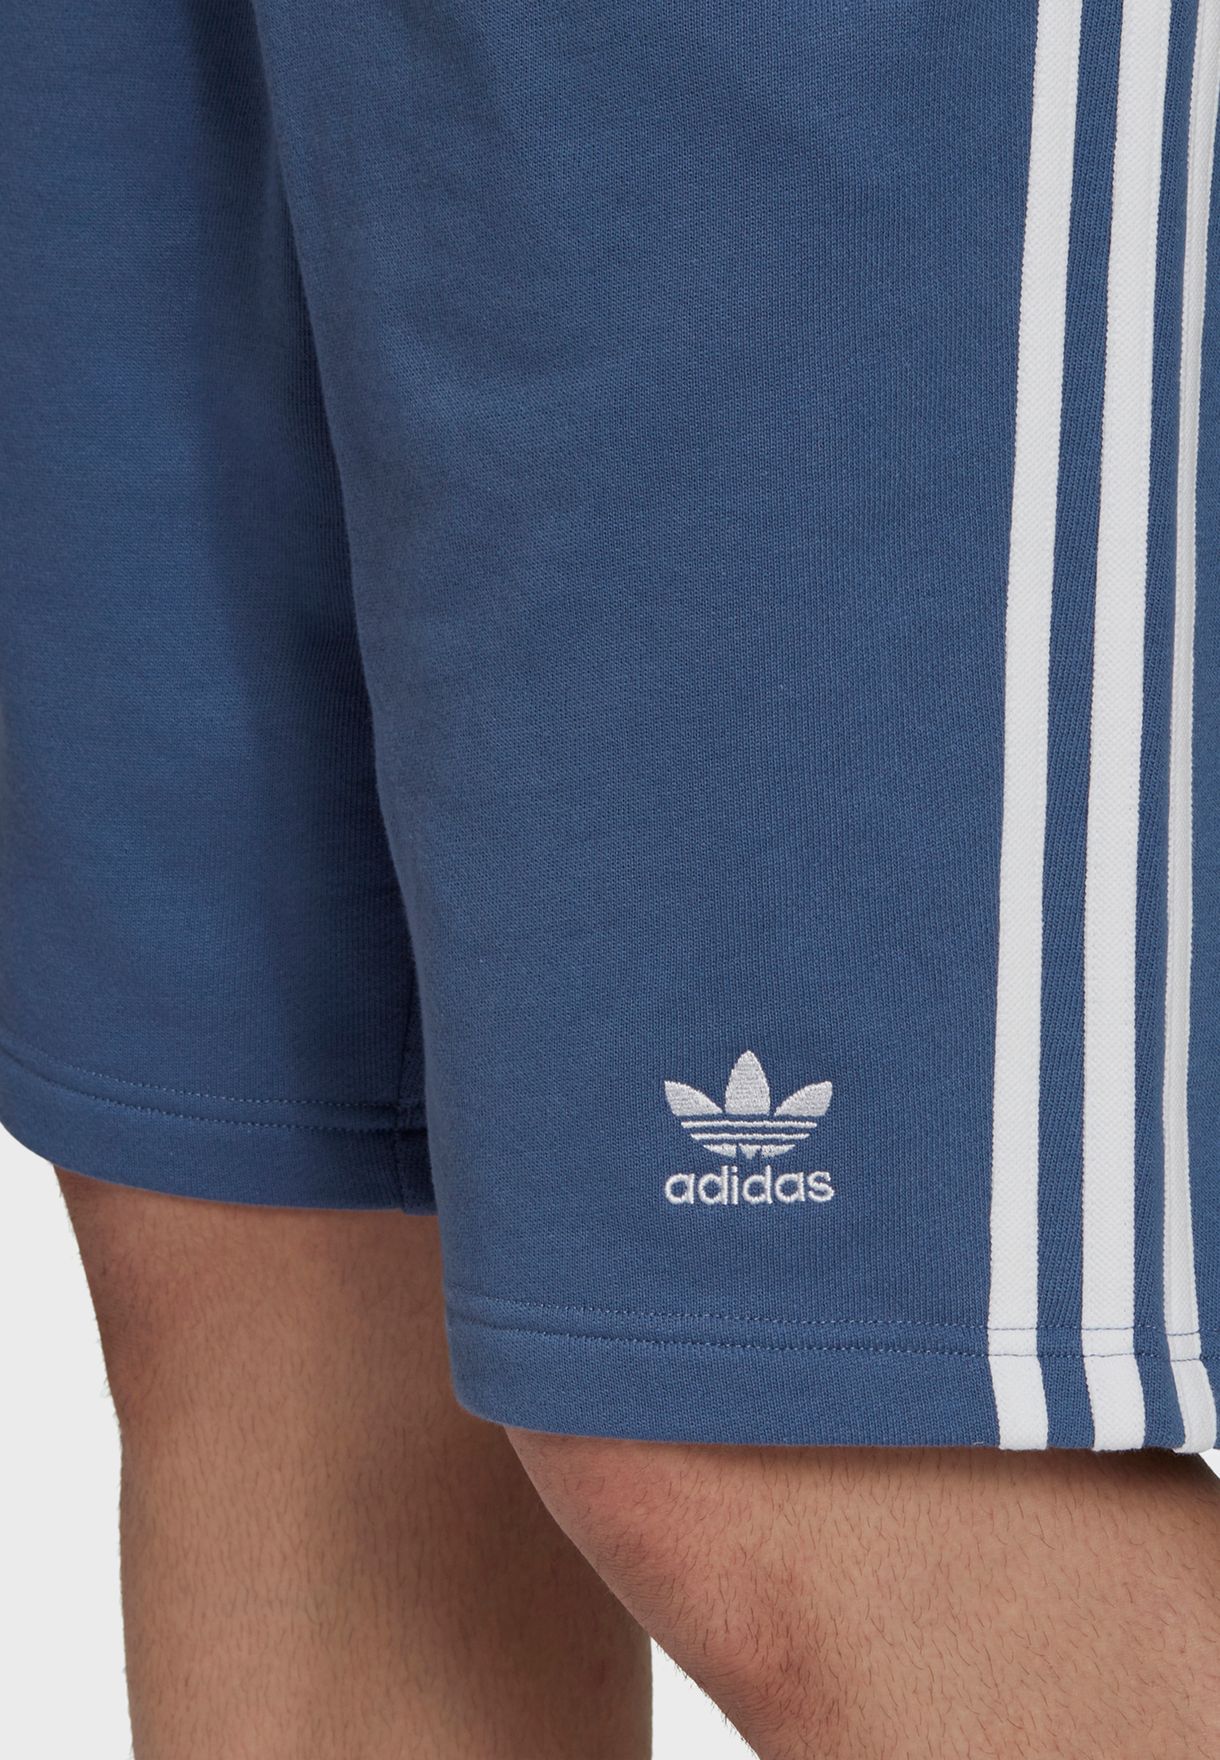 create Whose scientific Buy adidas Originals blue 3 Stripe Shorts for Men in Dubai, Abu Dhabi